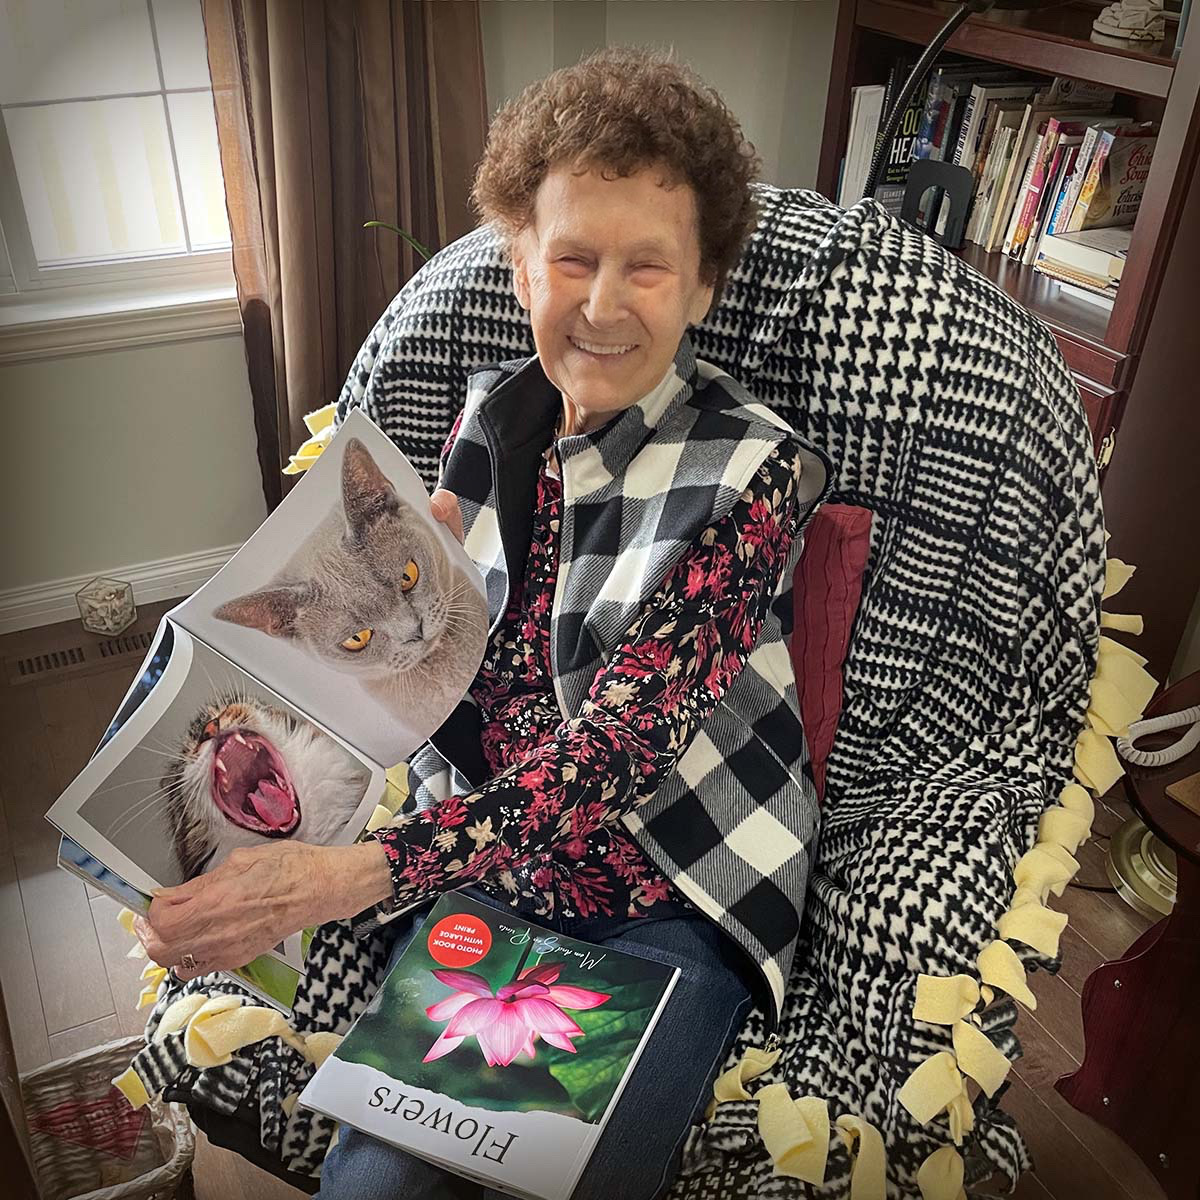 //momandsonprints.com/wp-content/uploads/2022/02/photo-book-gifts-dementia-alzheimers-seniors.jpg